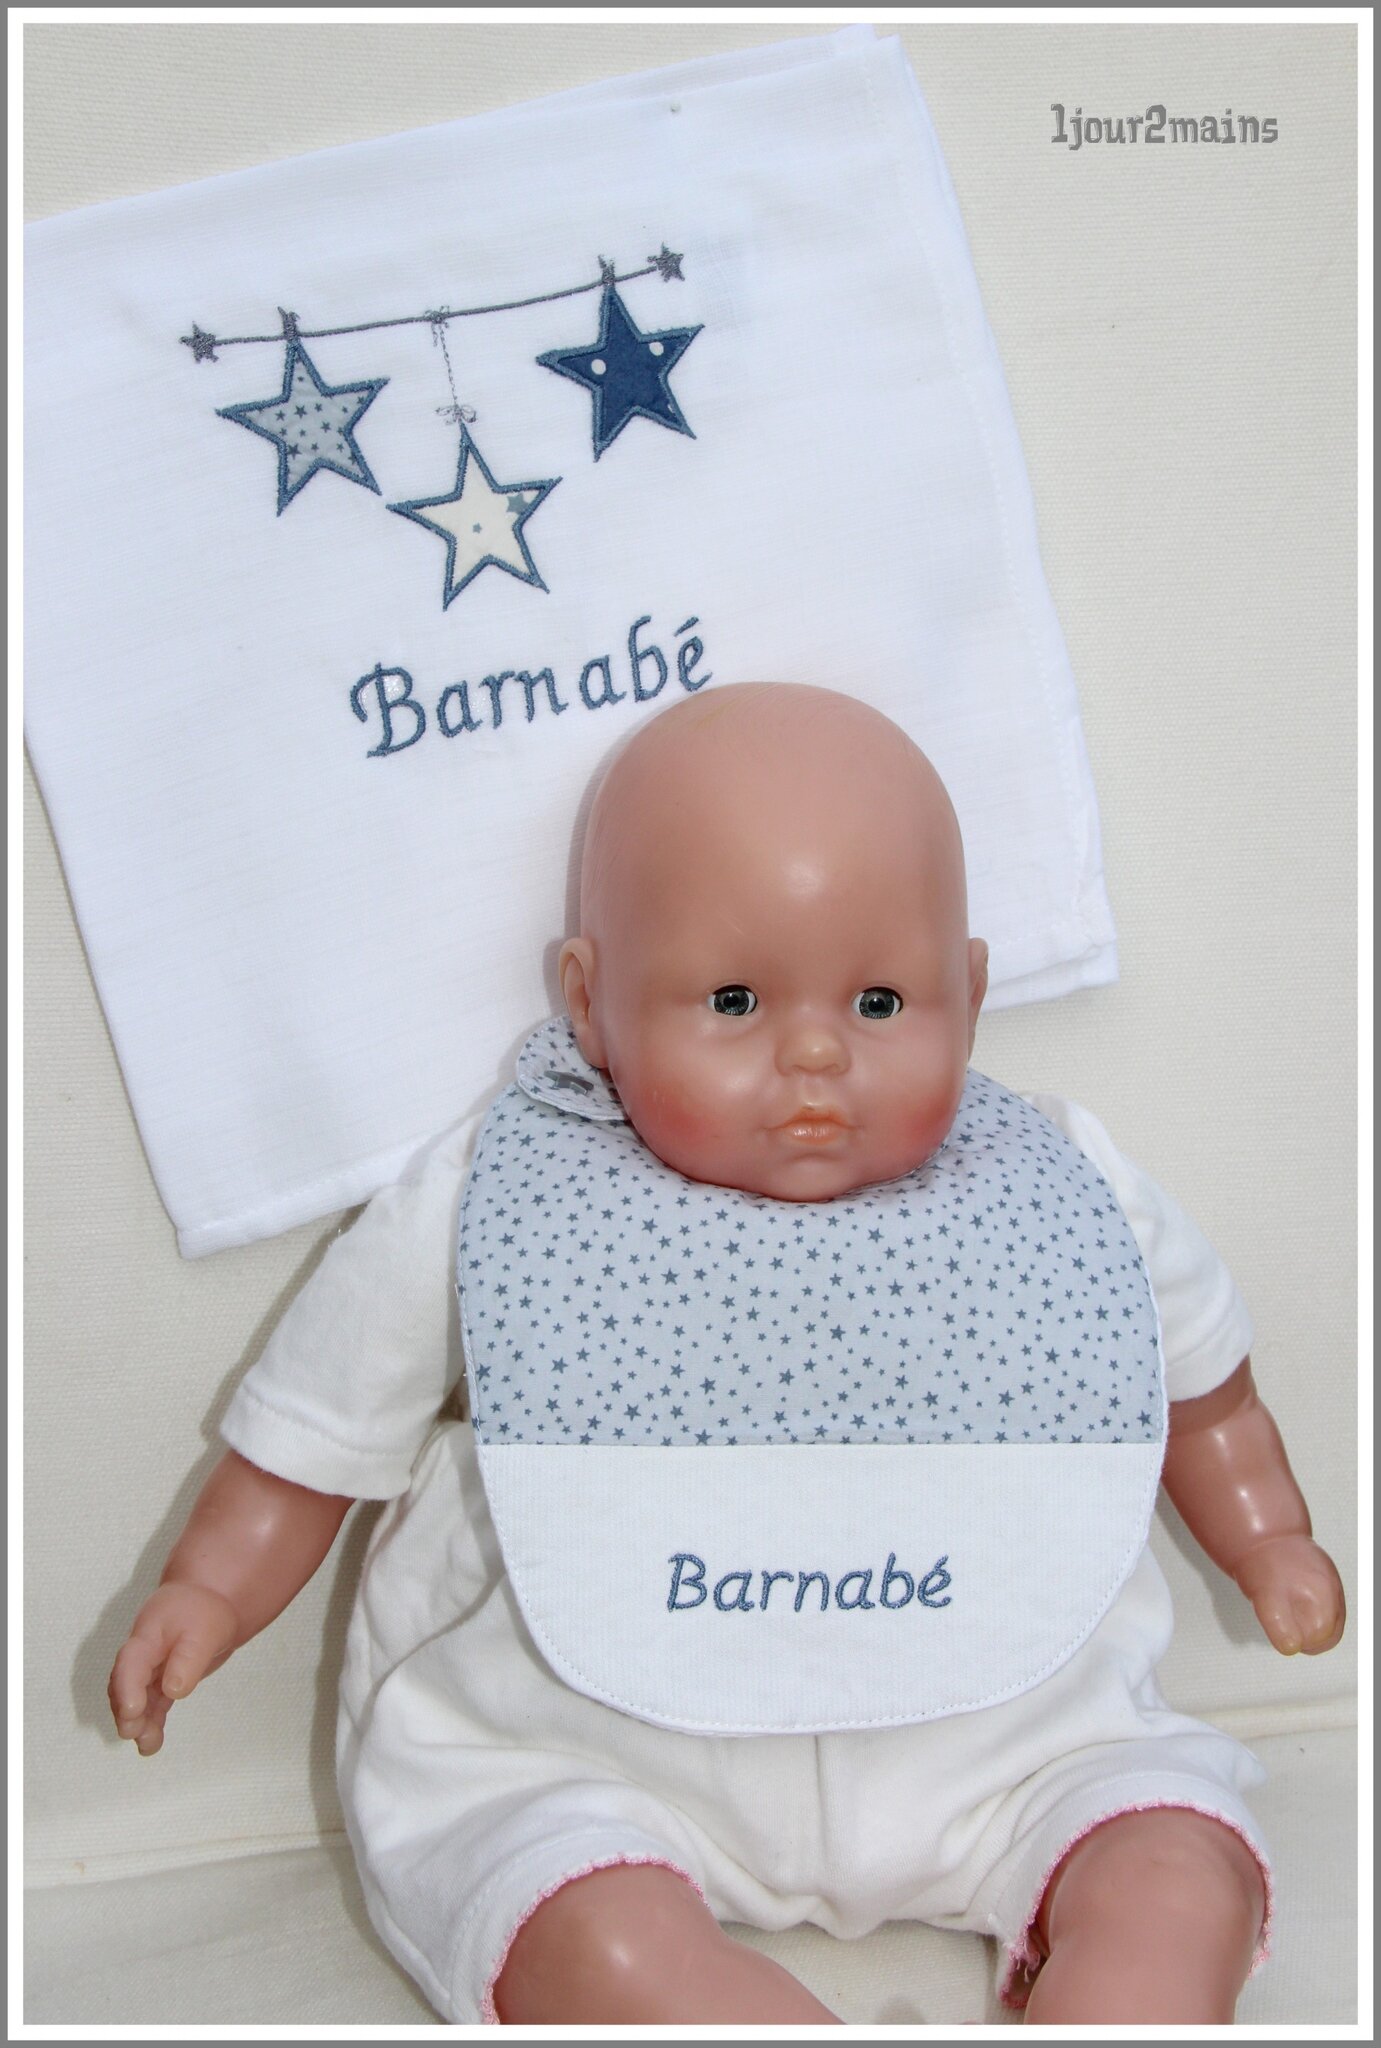 lange Barnabé